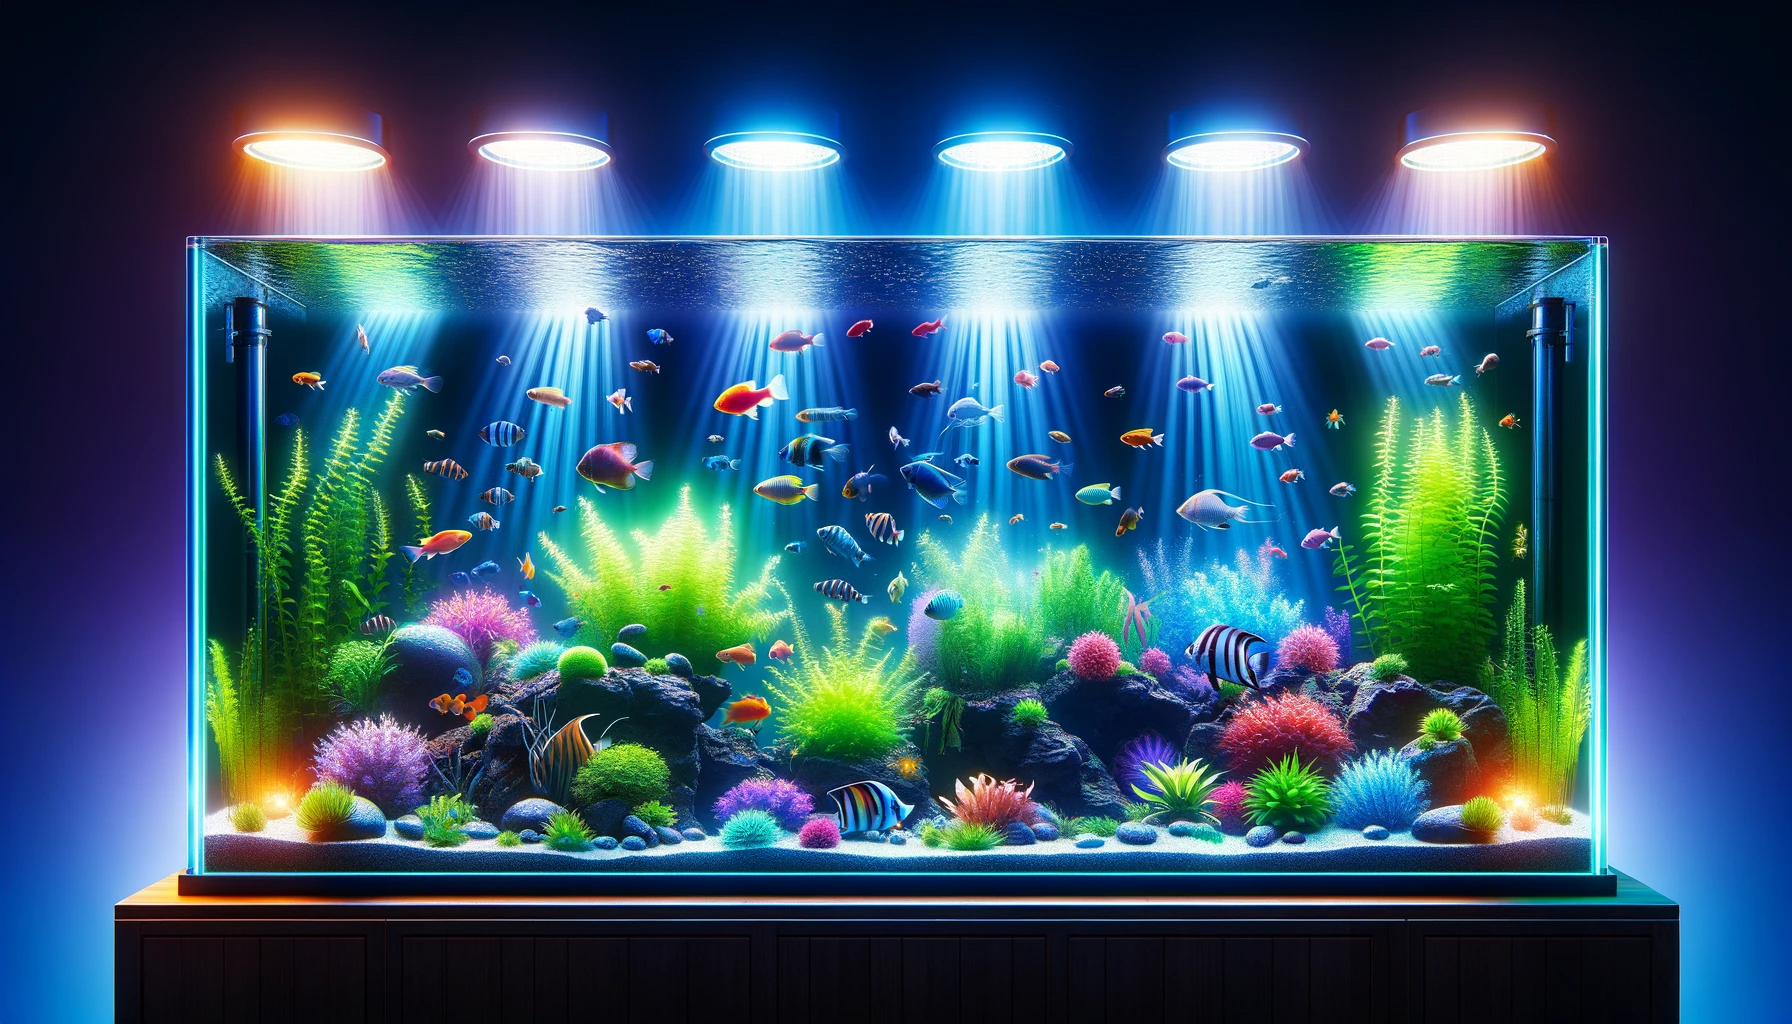 Do led lights cause algae?